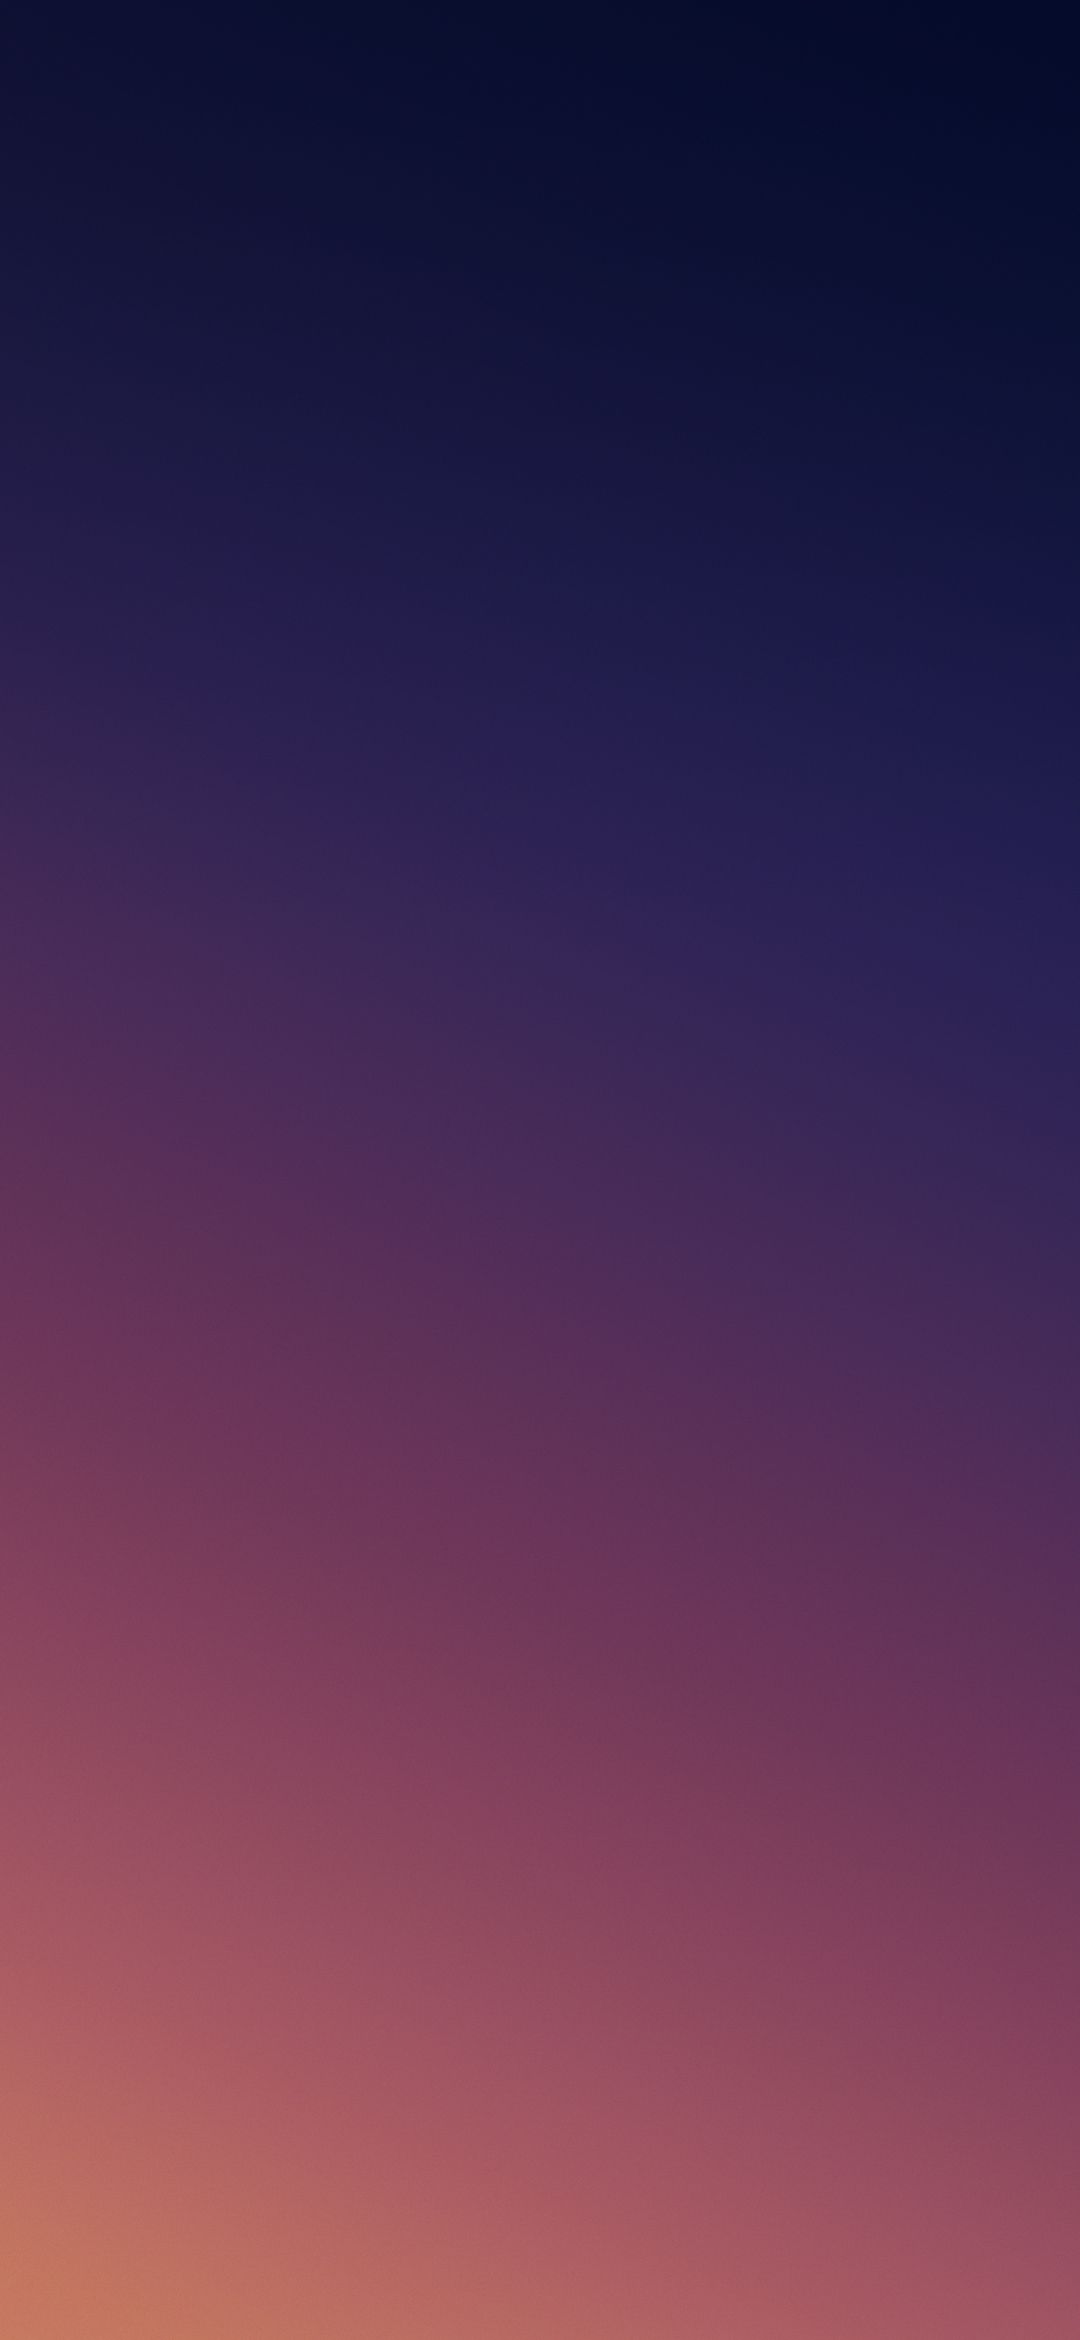 19+] Xiaomi Redmi Note 7 Pro Wallpapers - WallpaperSafari